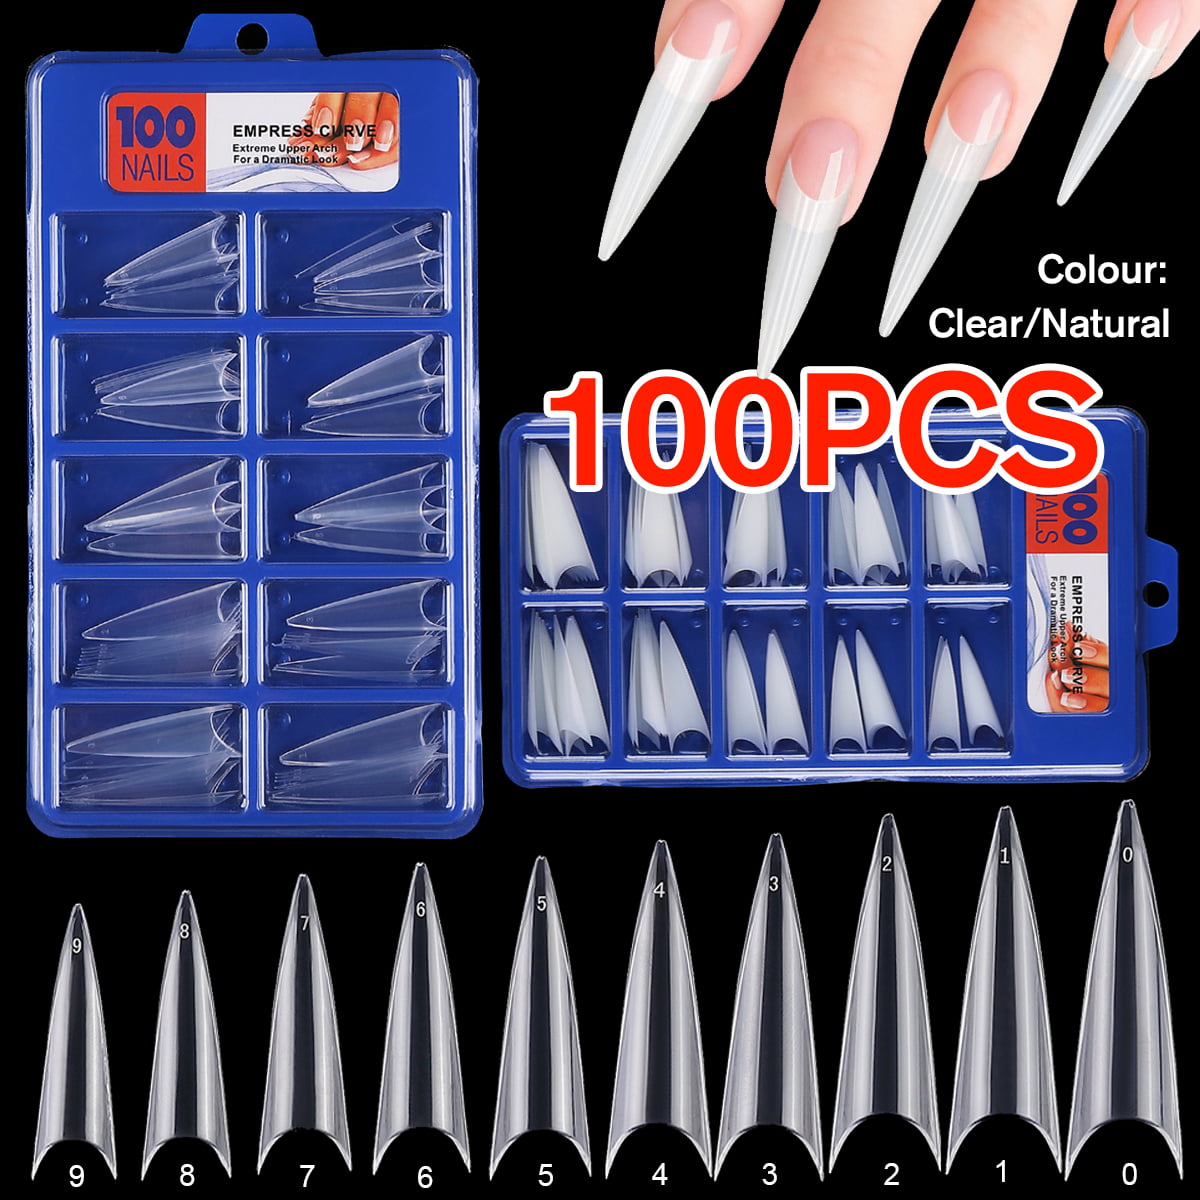 100pcs Extra Long Stiletto False Nail Tips Fake Nails Tips Coffin Nails Acrylic Gel Salon Full Cover Clear Natural Walmart Com